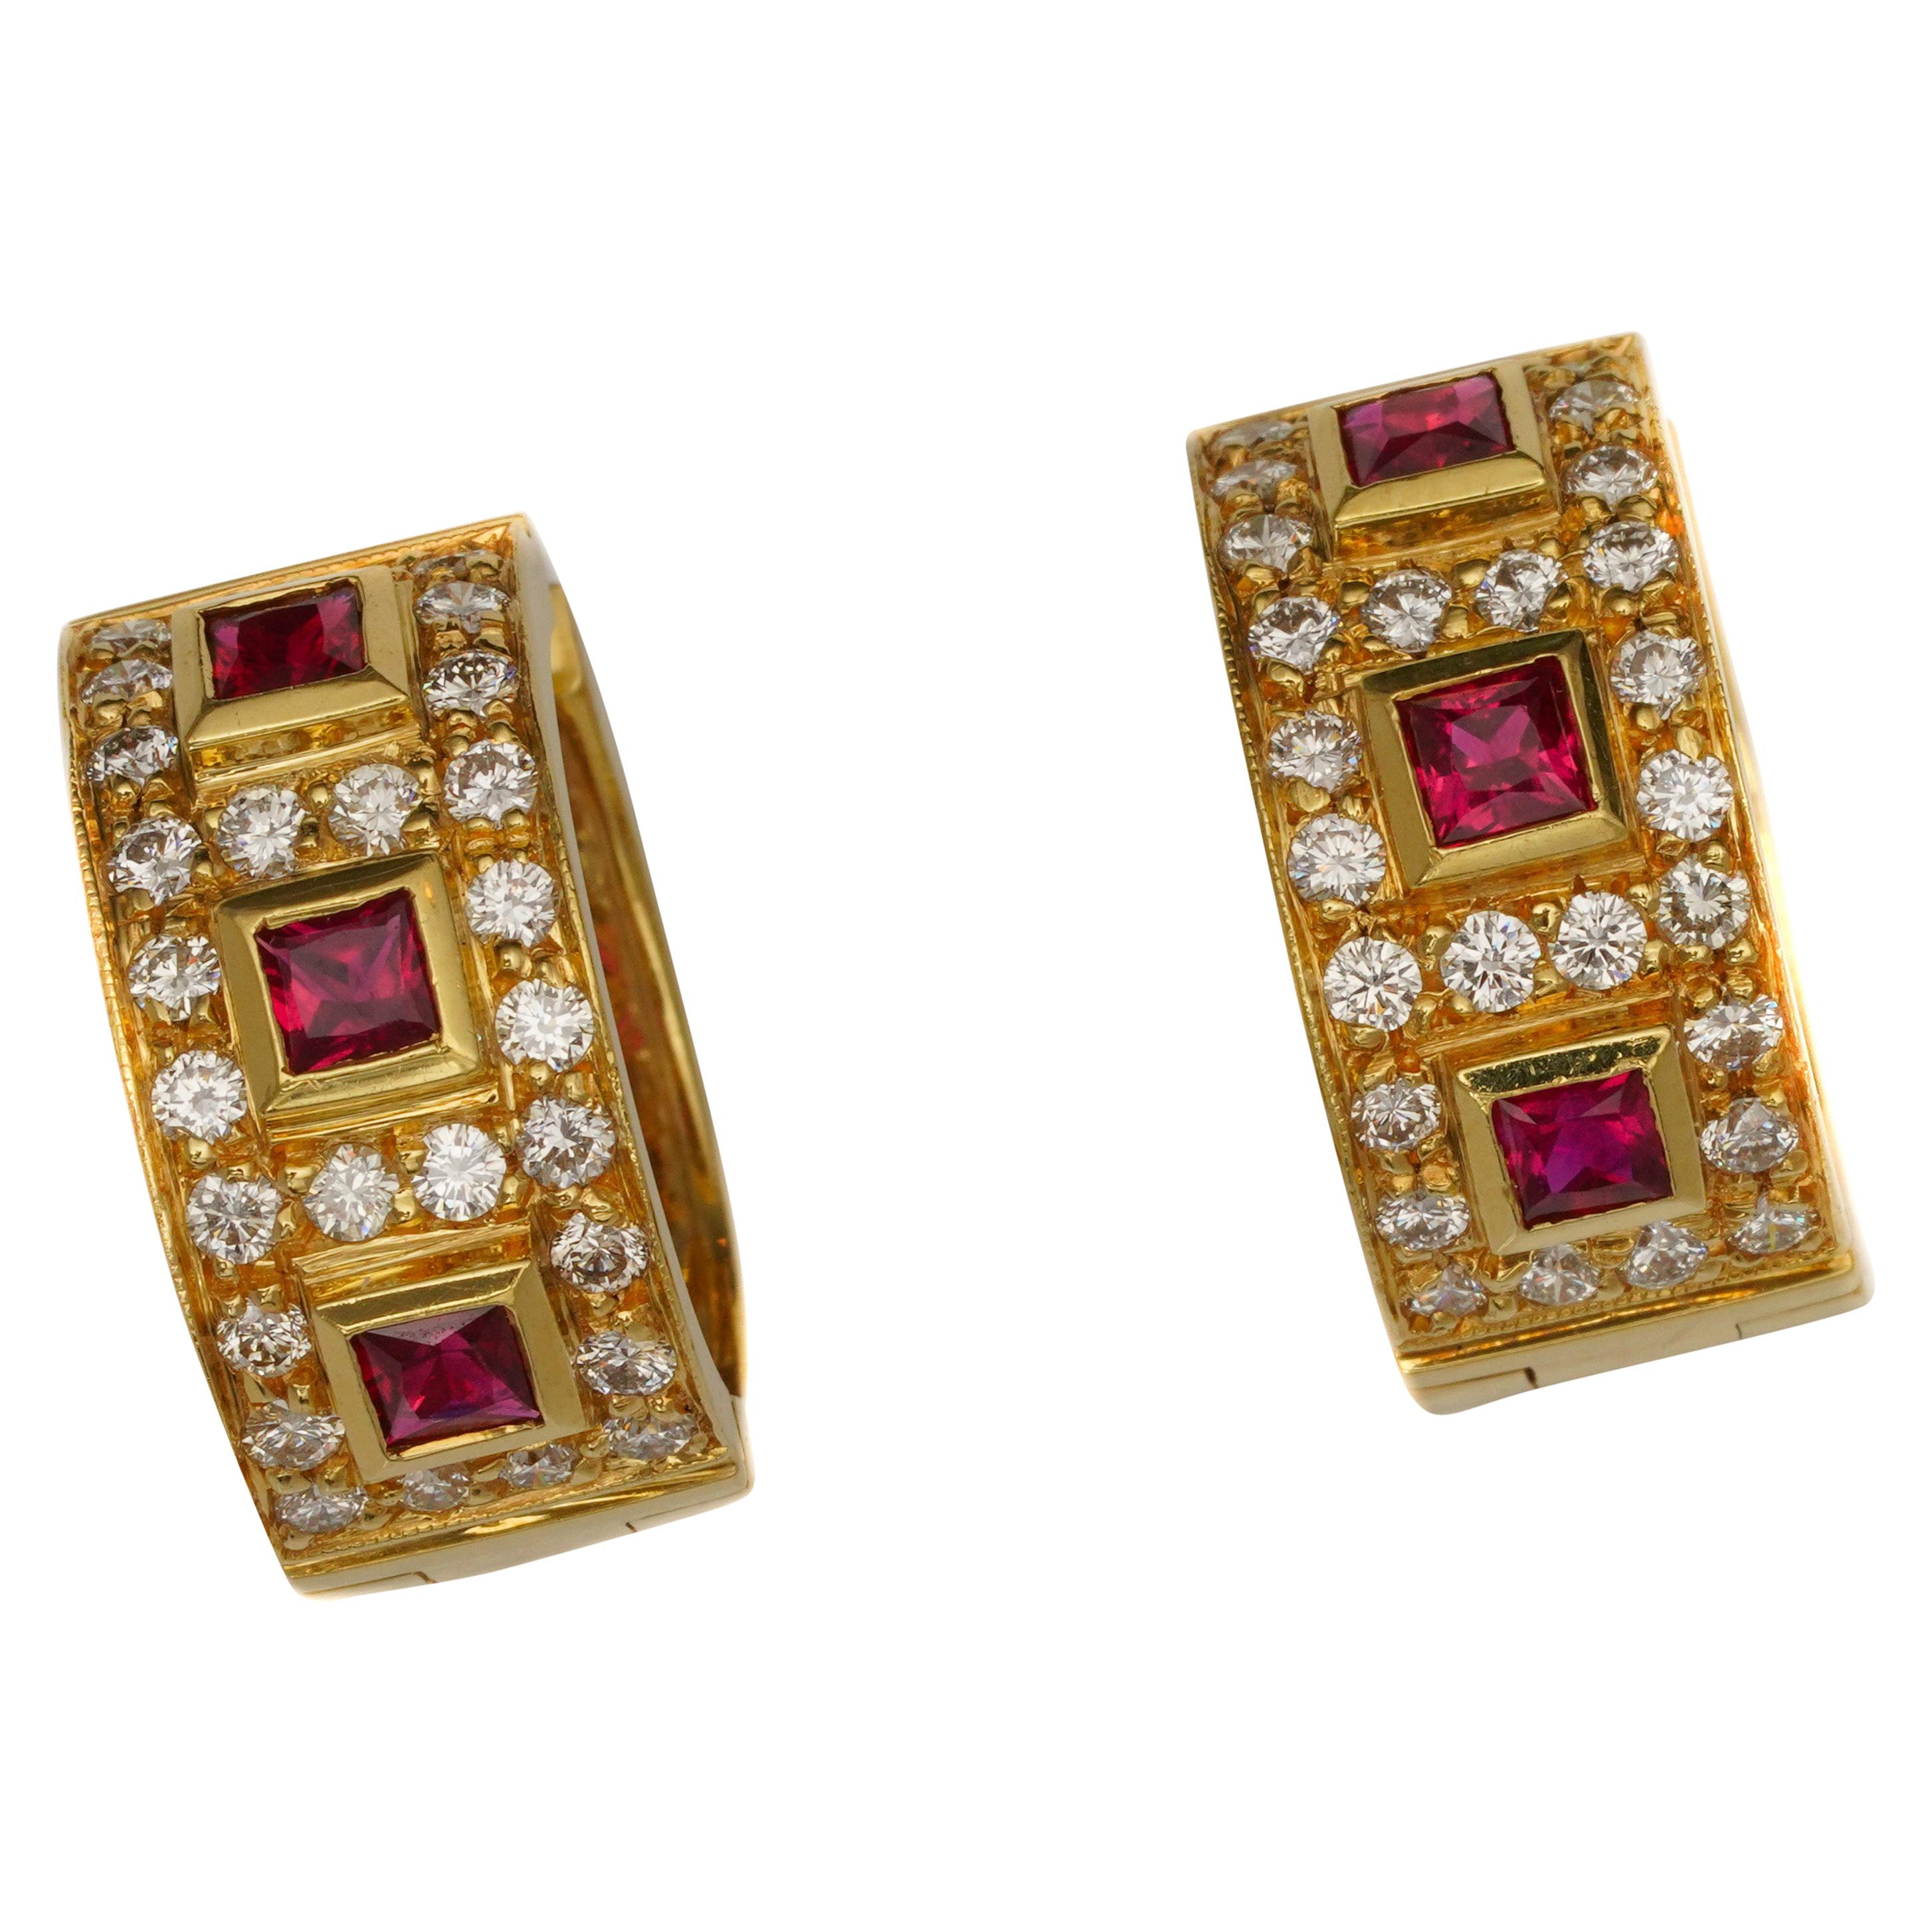 1 Carat Diamond and .5 Carat Ruby Earrings in 18 Karat Gold